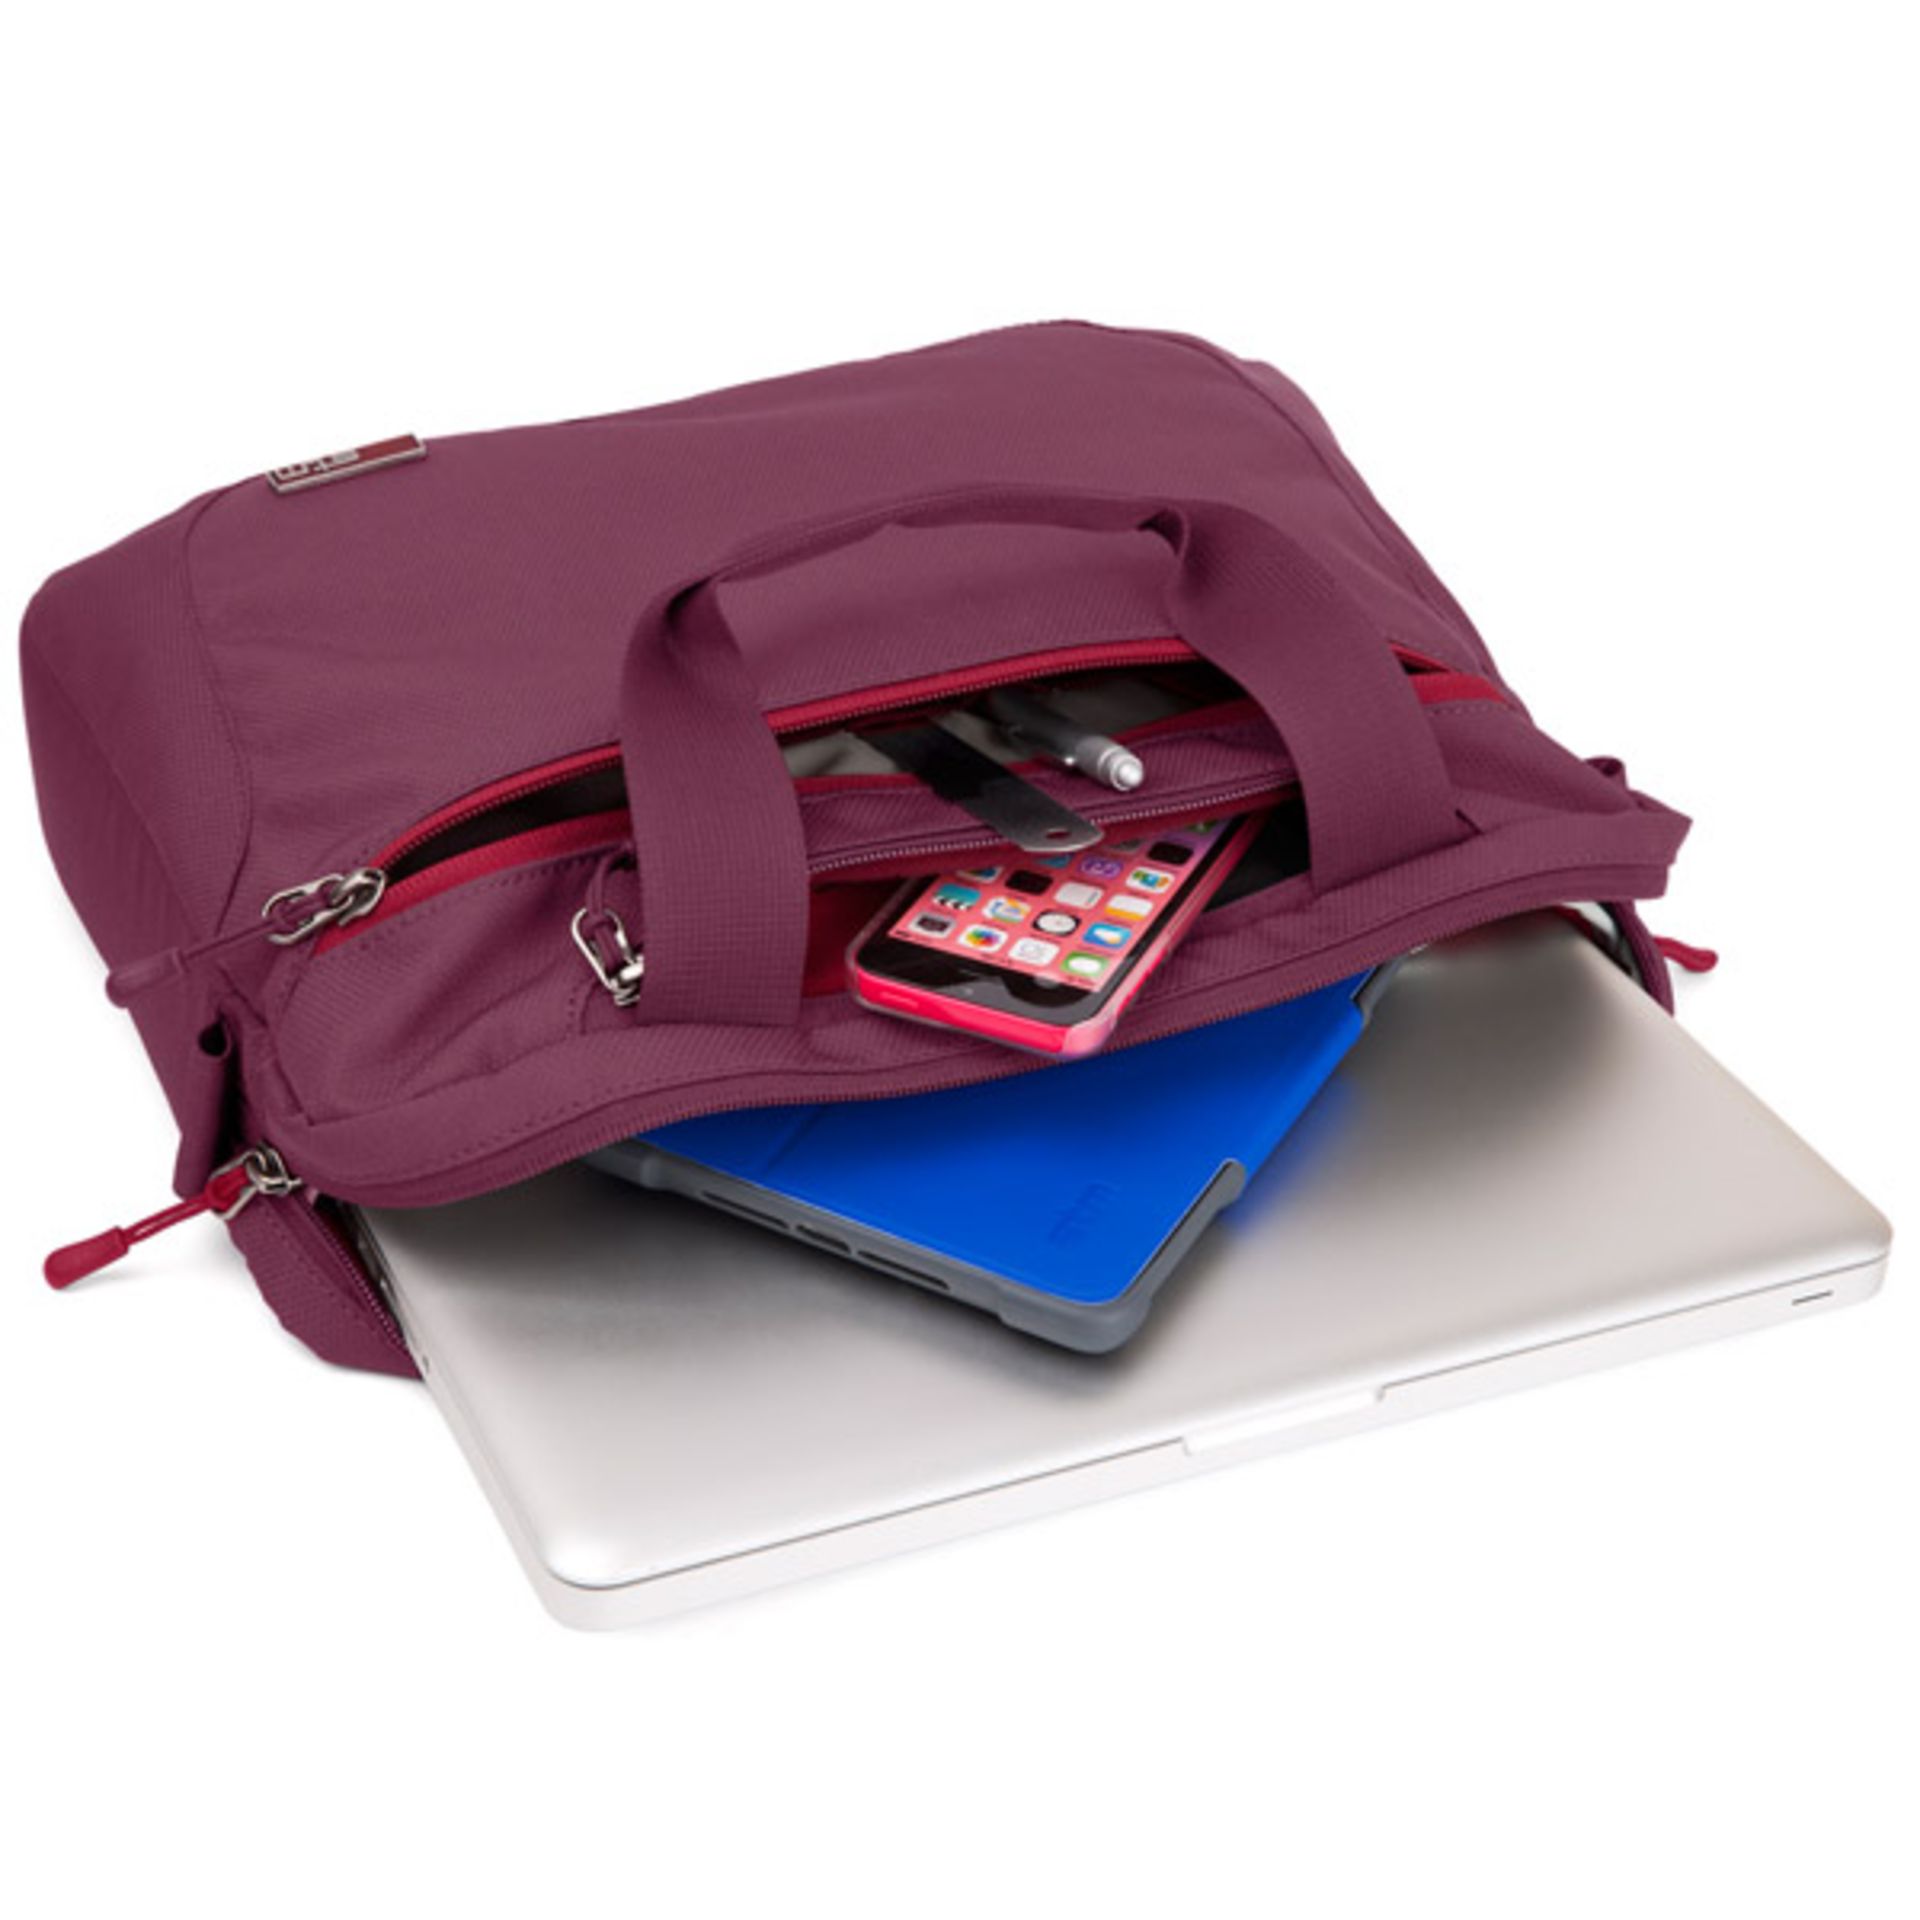 + VAT Brand New Medium Shoulder Bag - RRP £42.99 Amazon Price £33.57 - For Laptop/Tablet Up To